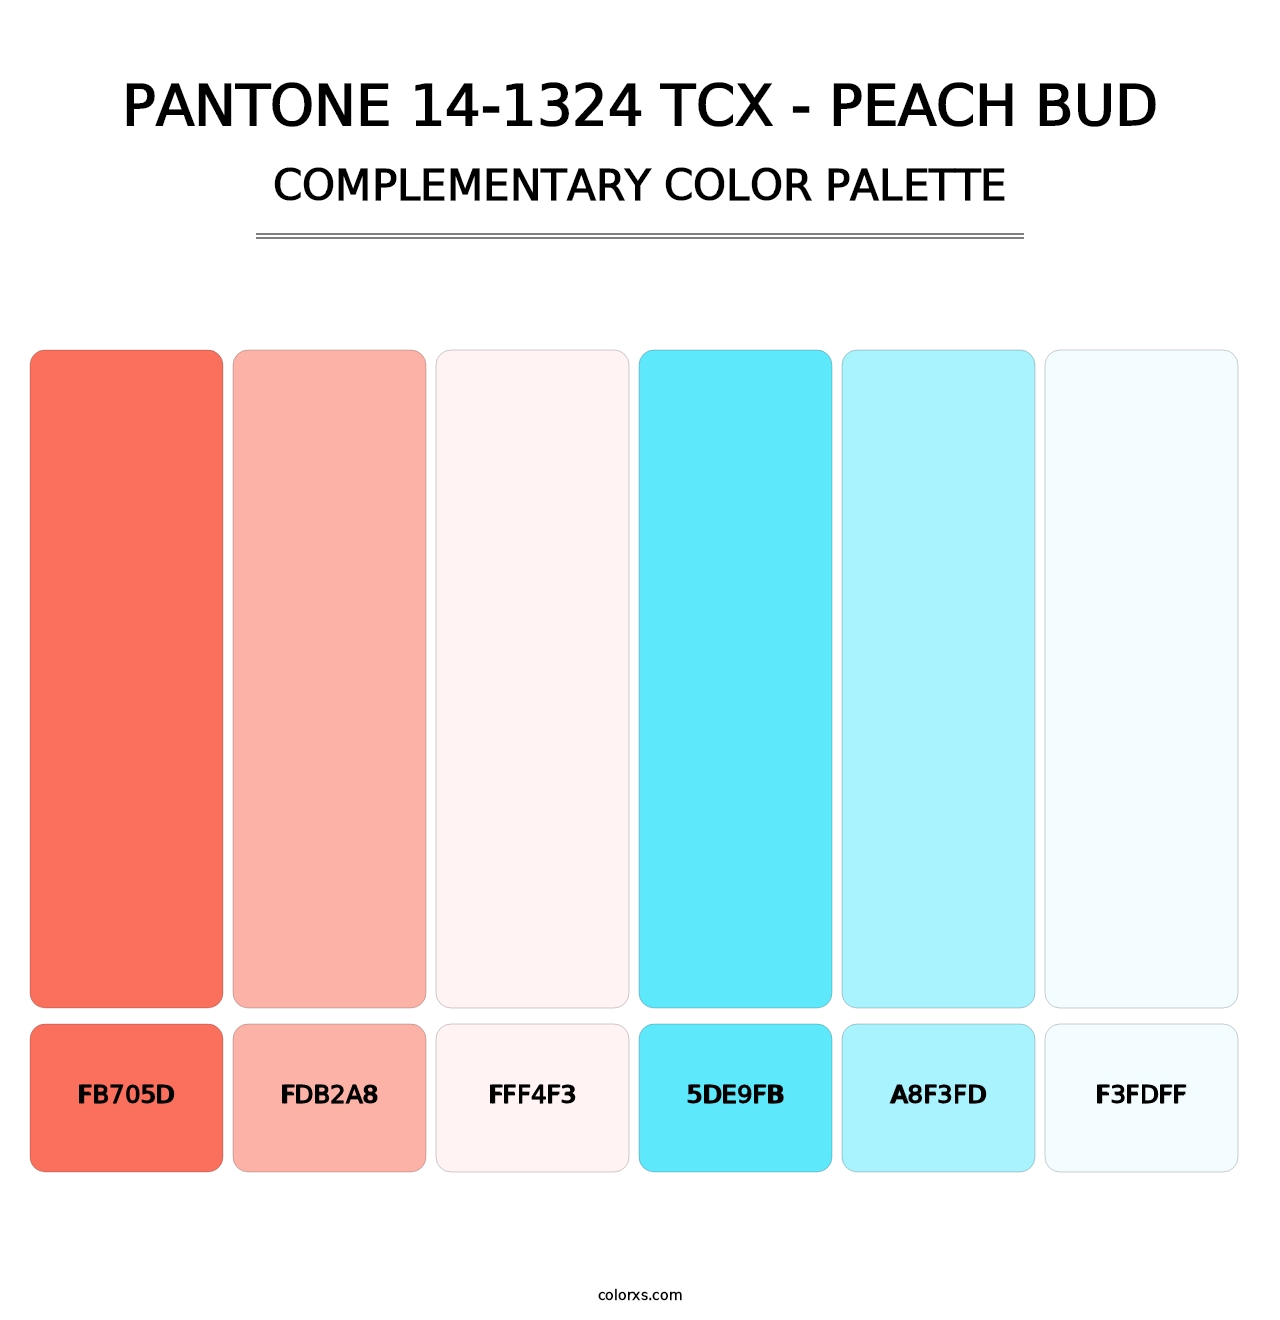 PANTONE 14-1324 TCX - Peach Bud - Complementary Color Palette